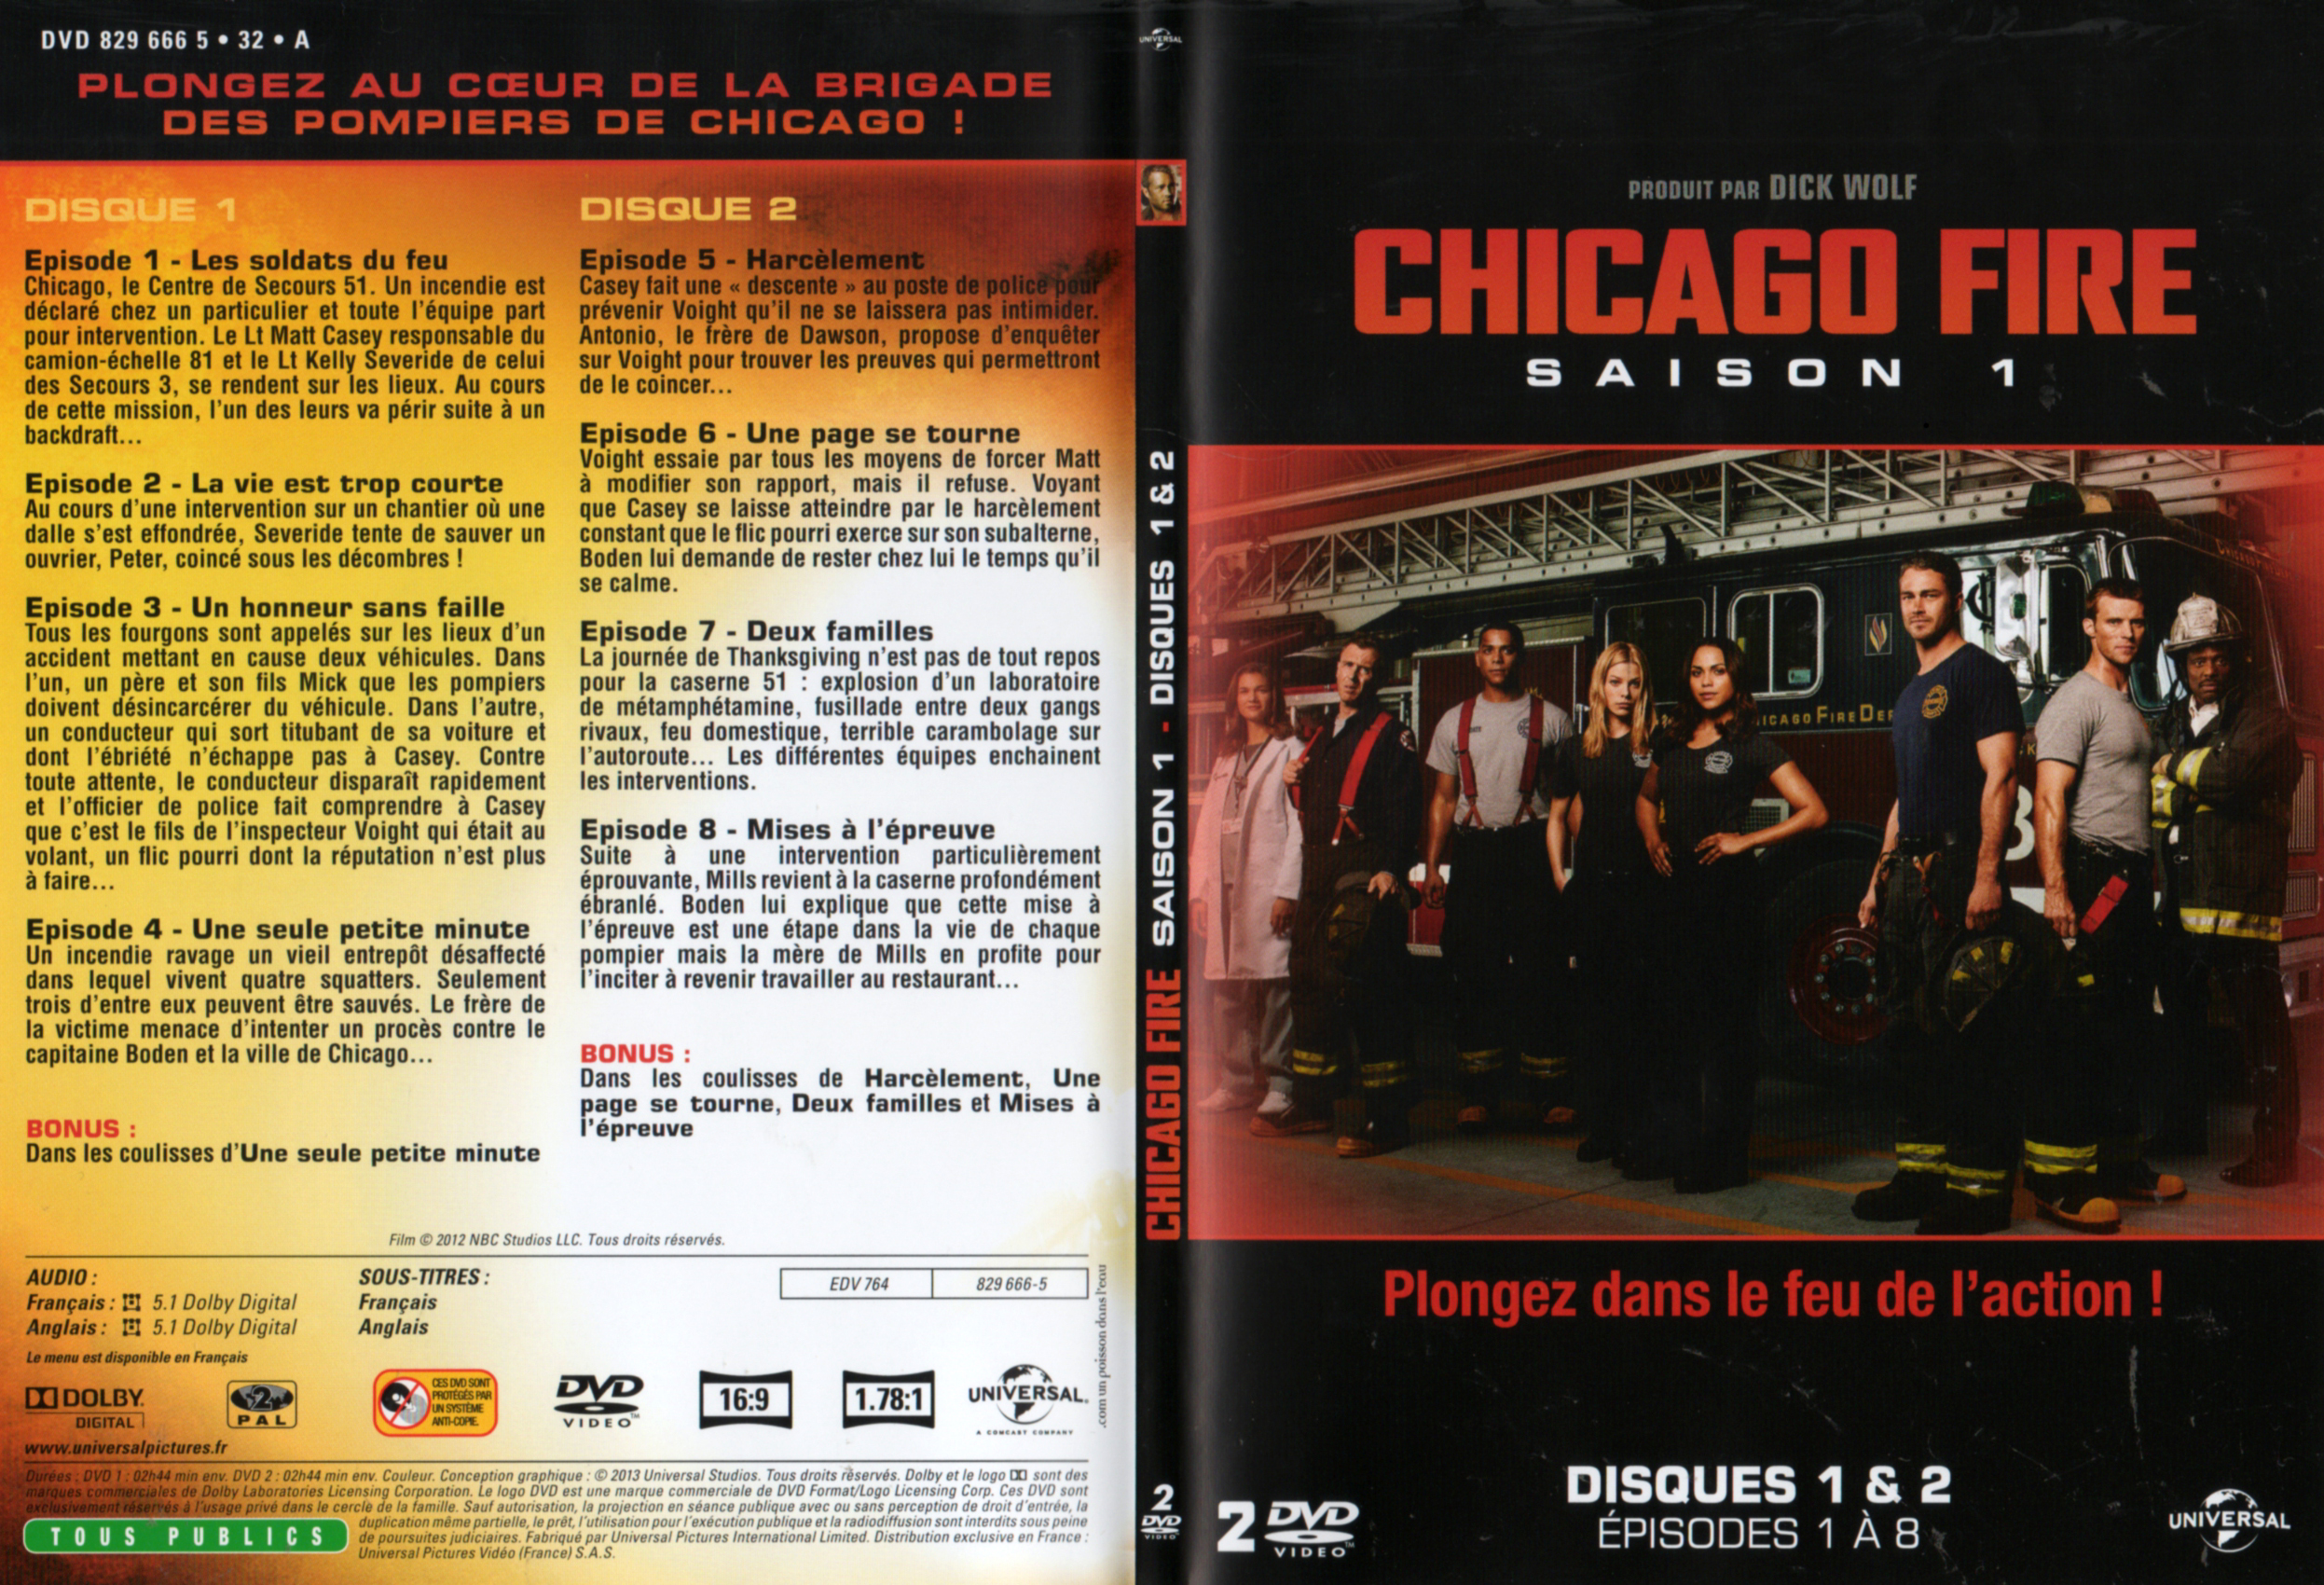 Jaquette DVD Chicago Fire Saison 1 DVD 1